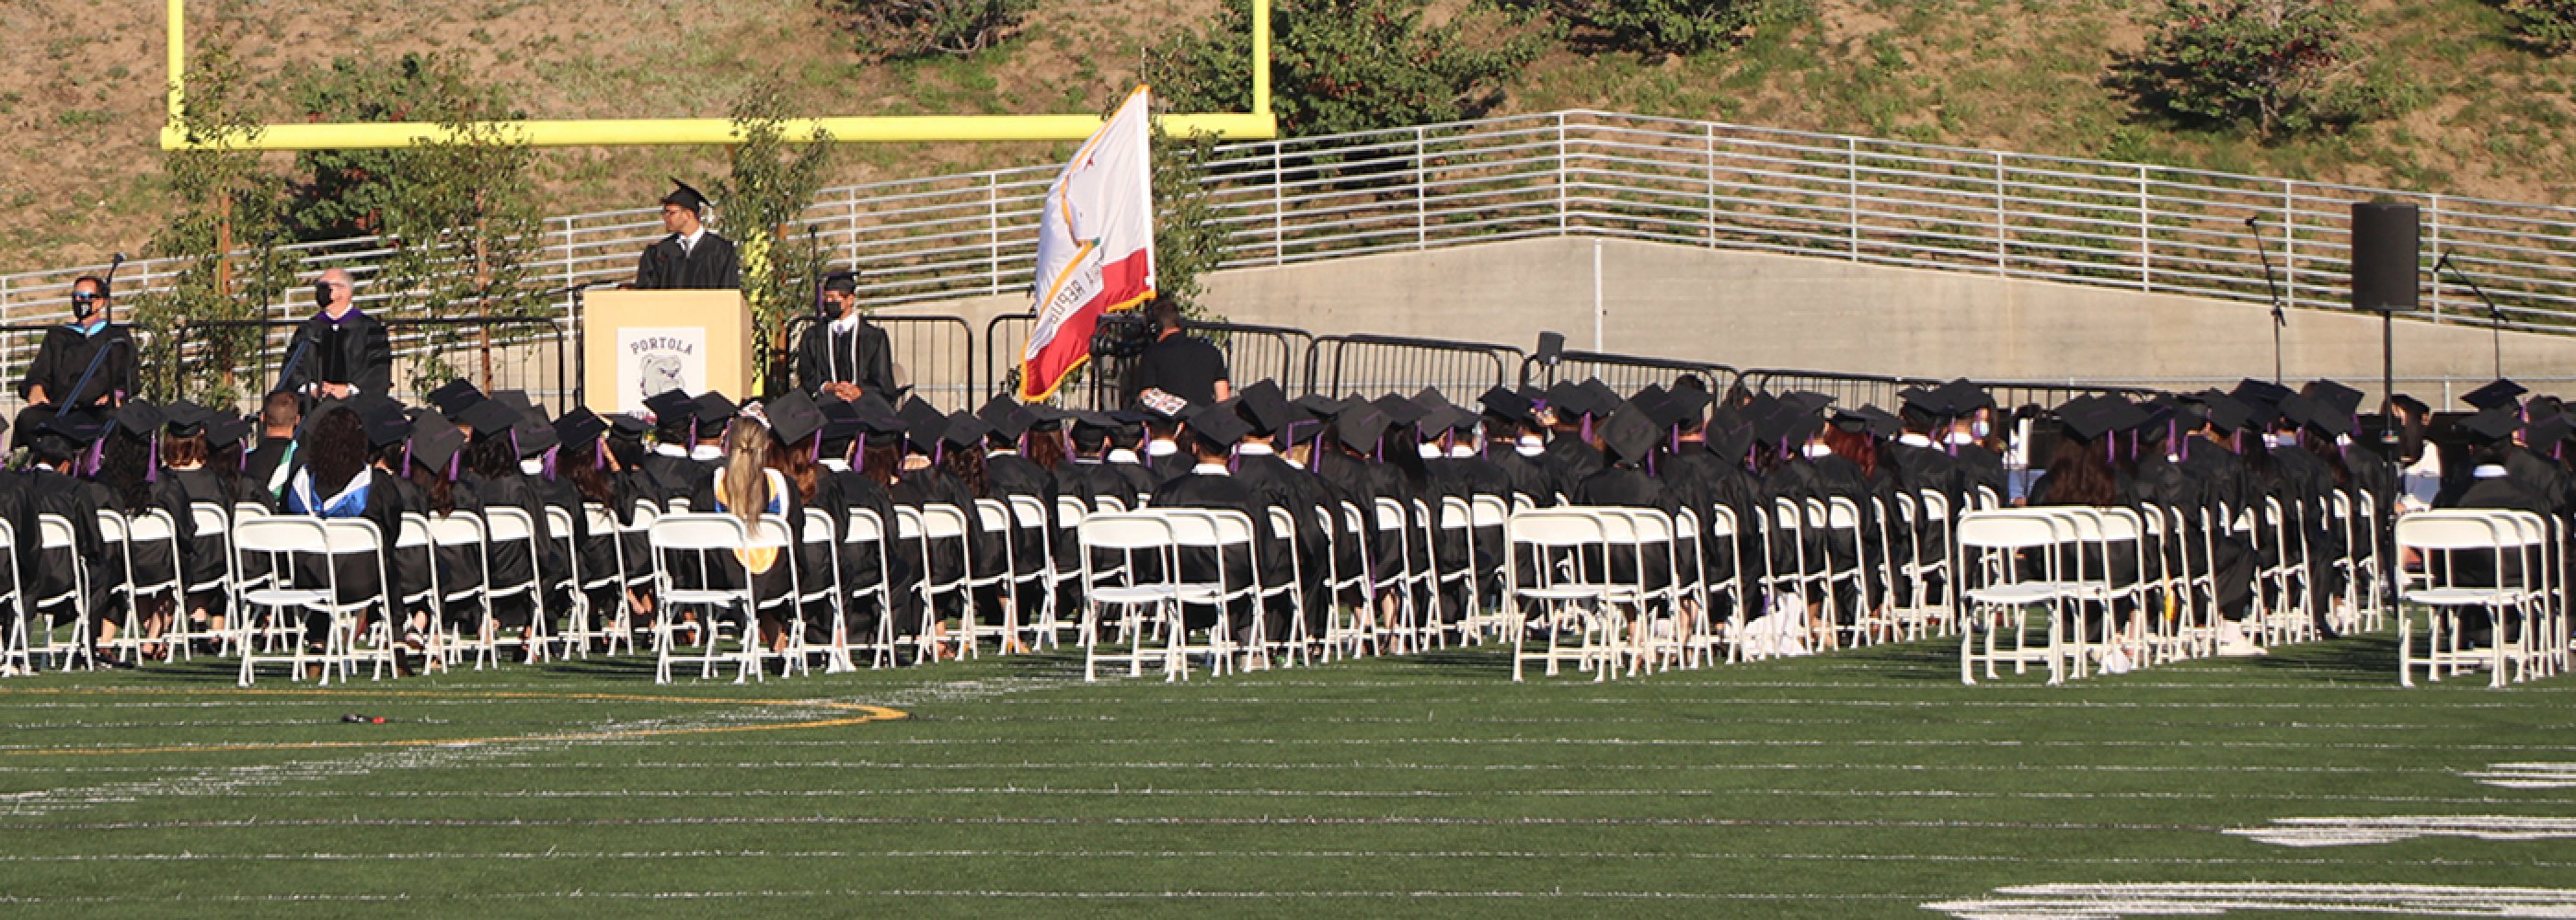 Graduation on field